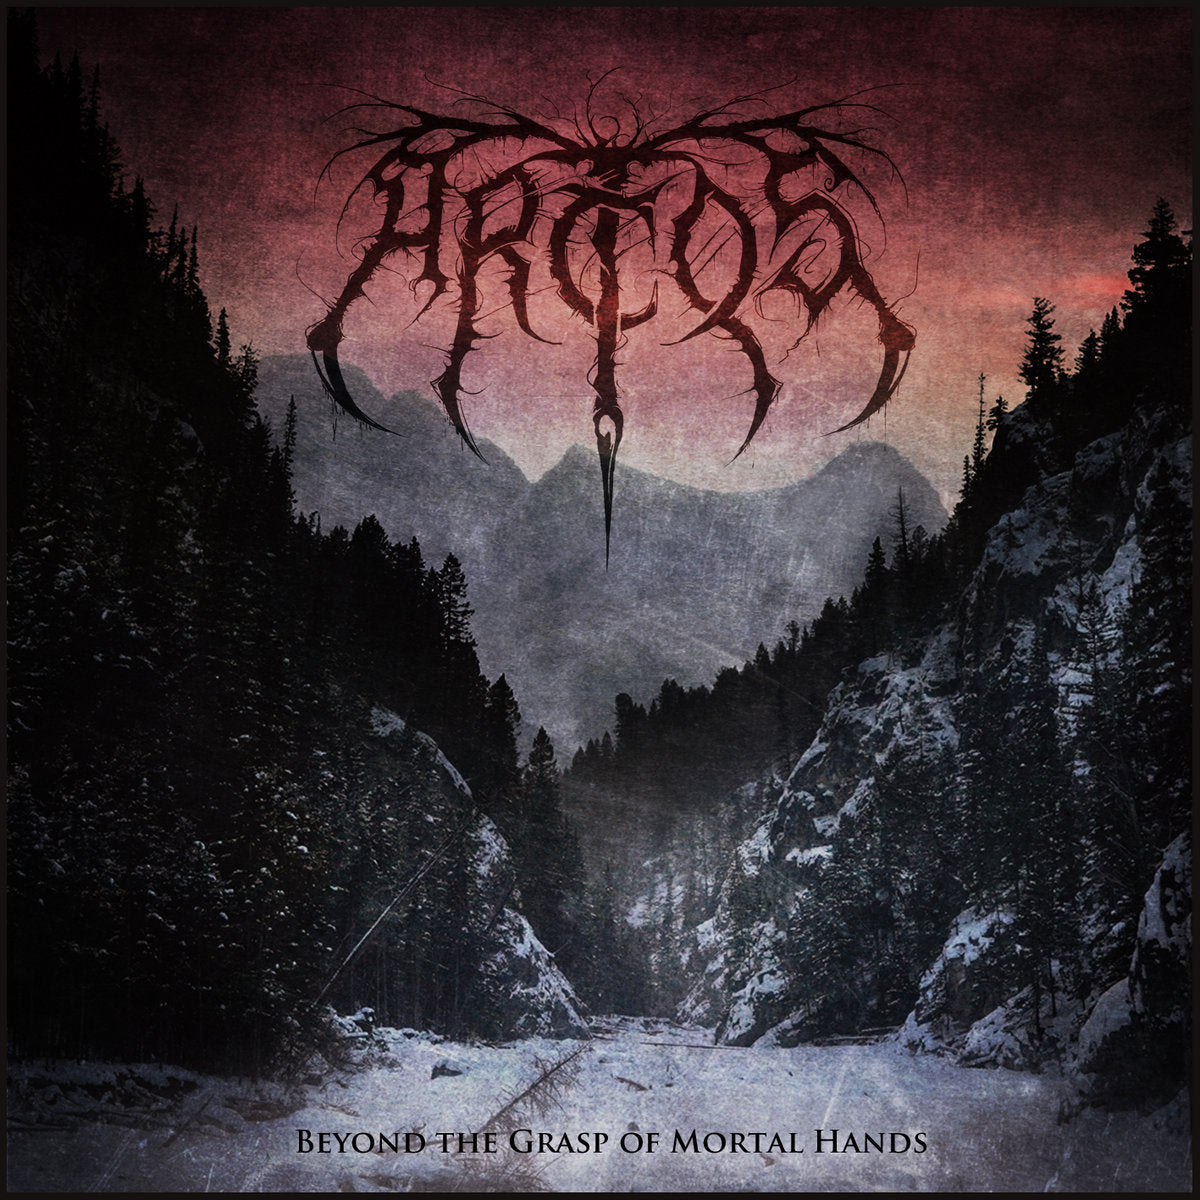 ARCTOS "Beyond the Grasp of Mortal Hands" CD